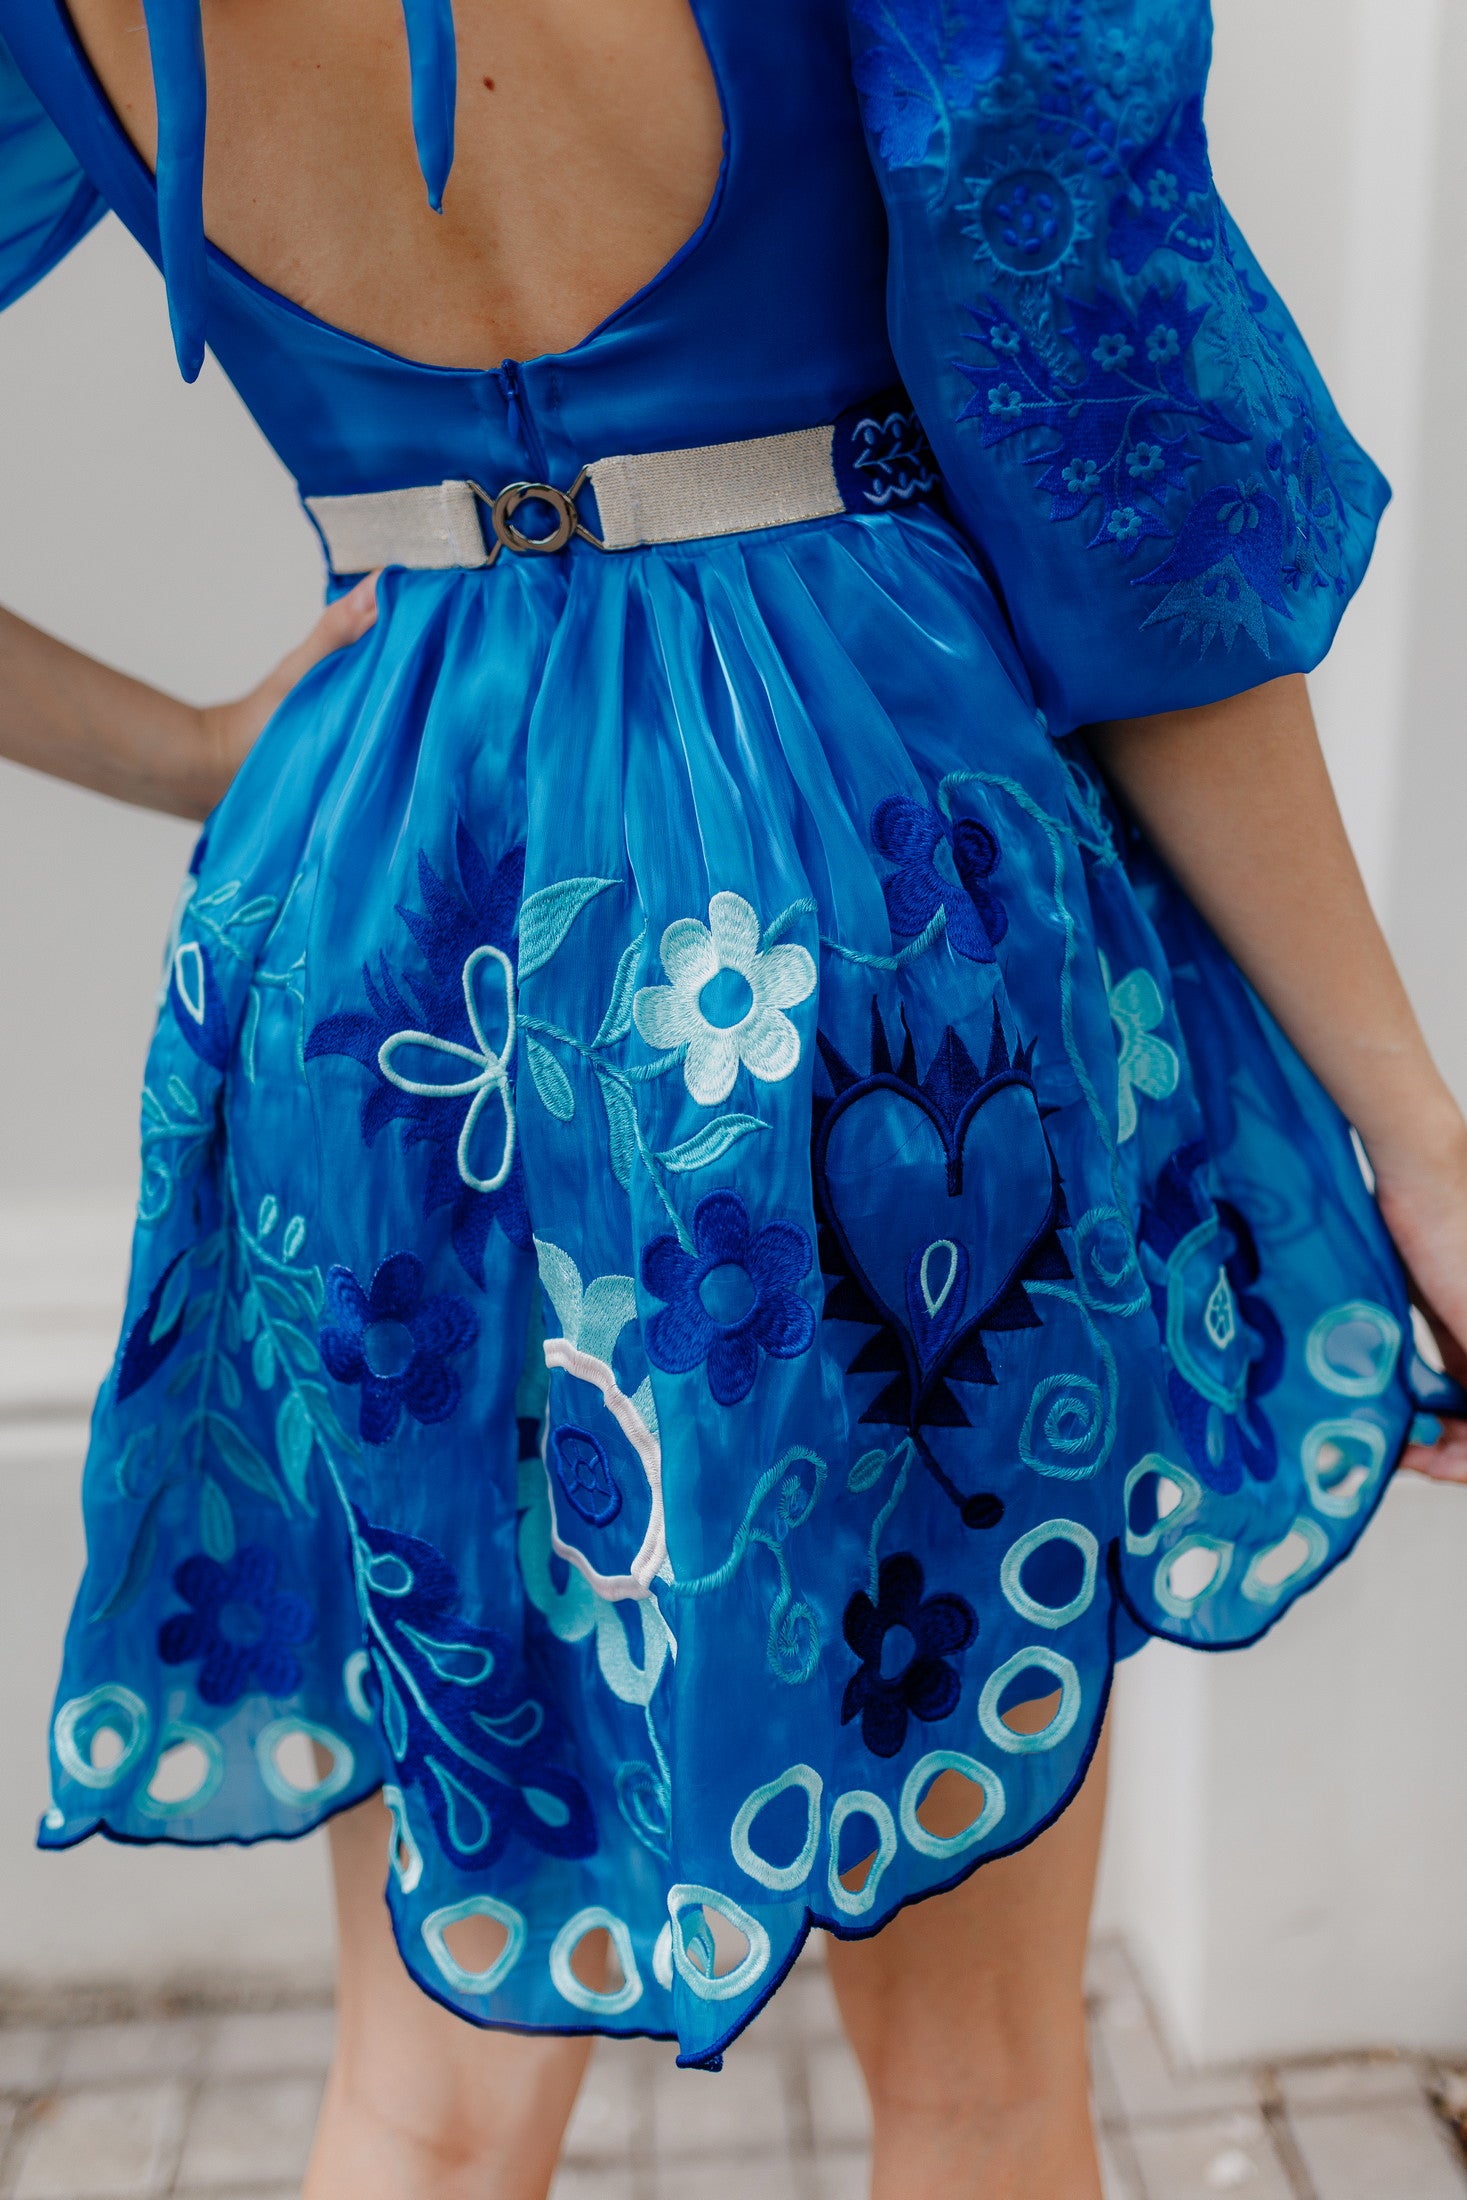 Krátke modré šaty Sága krásy